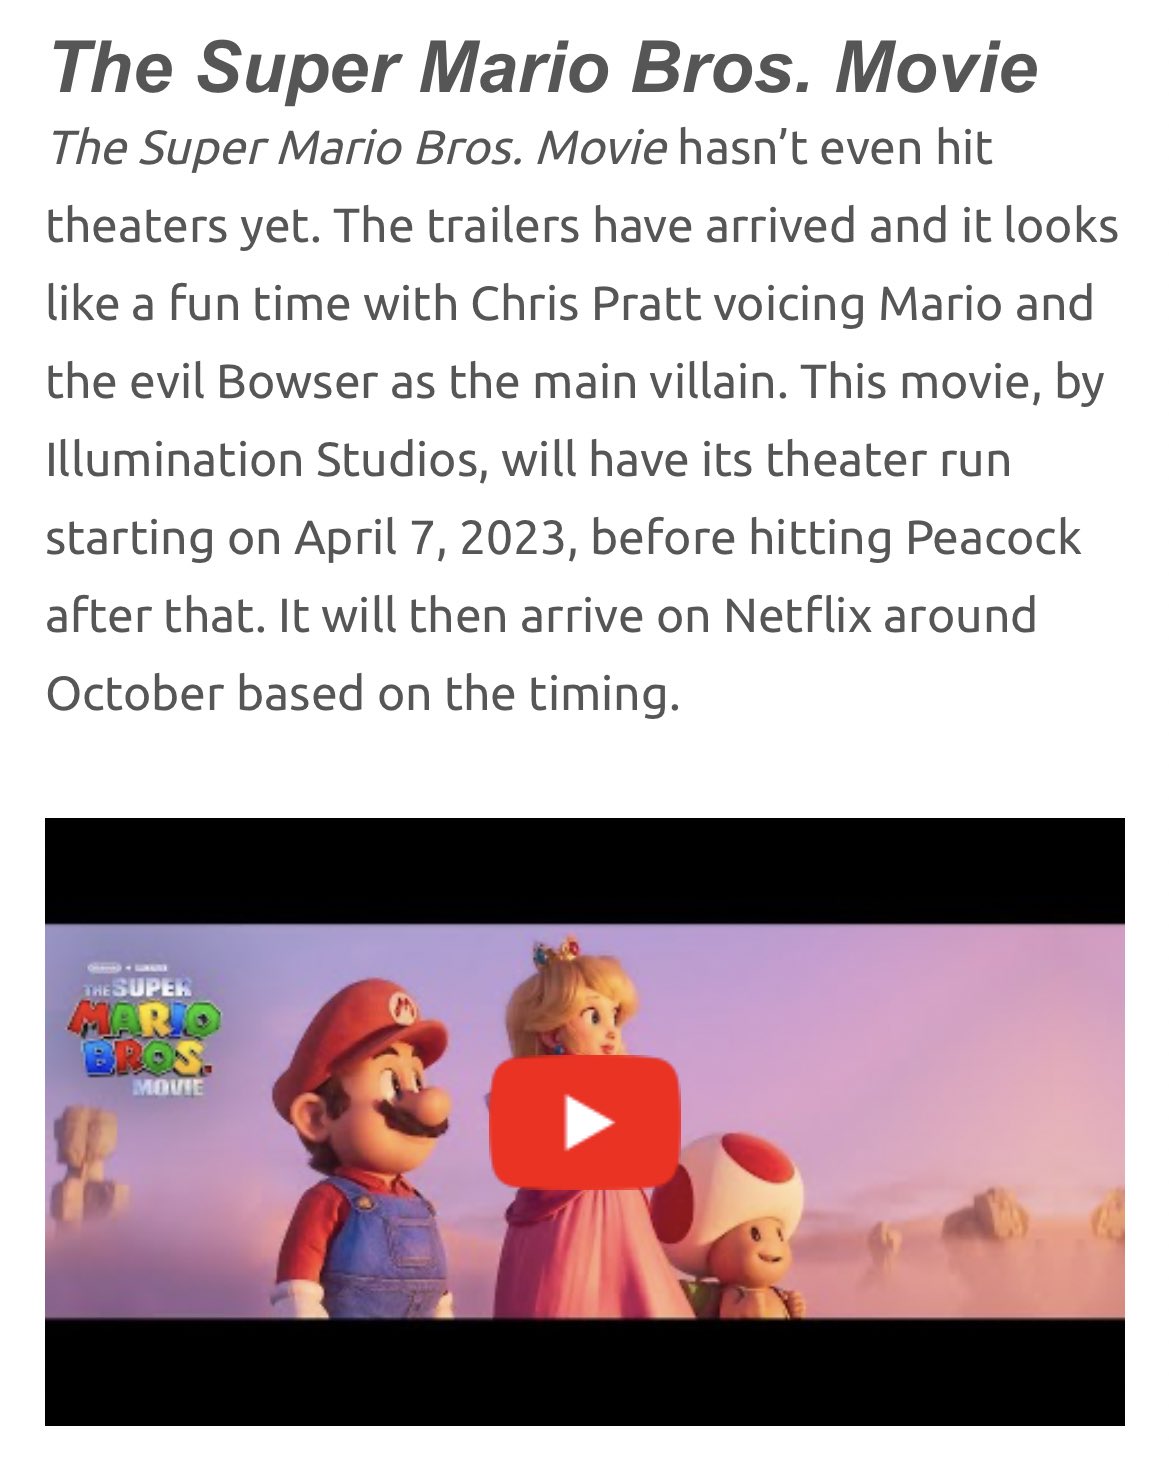 Super Mario Bros. Movie Appears on Netflix